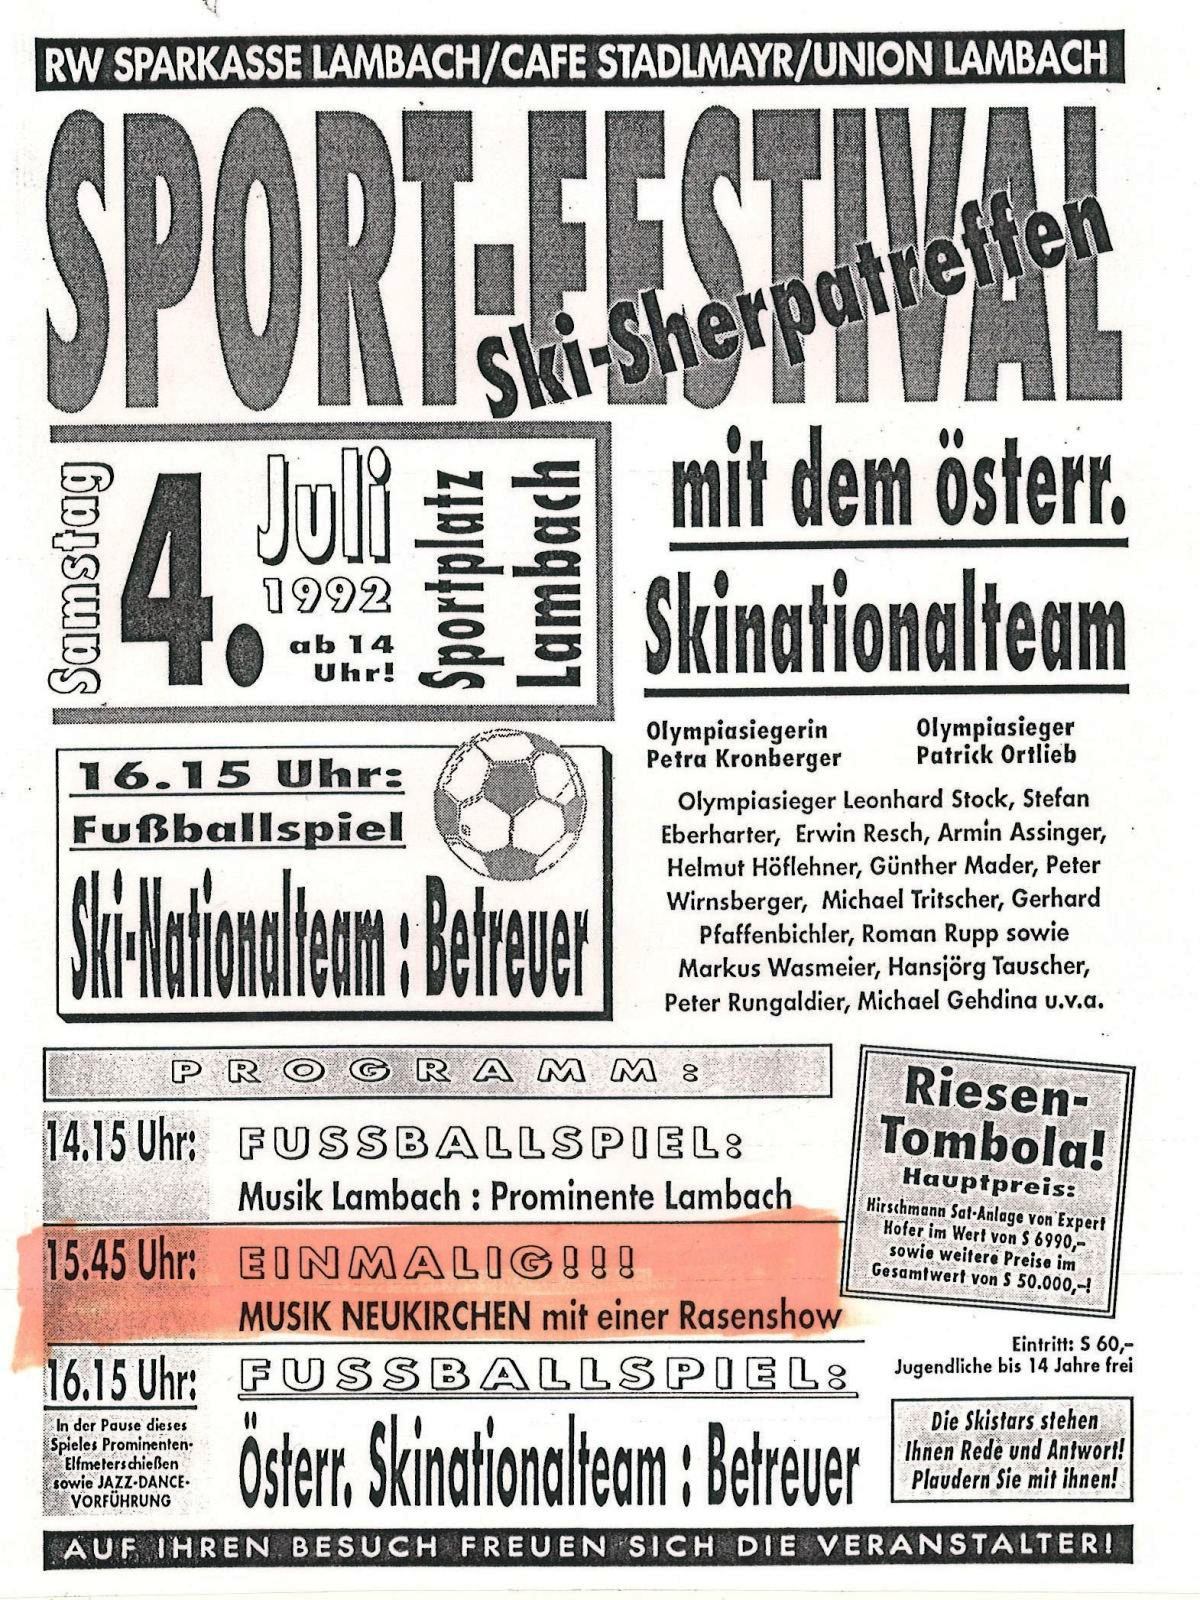 Rasenshow am Sportplatz Lambach 1992